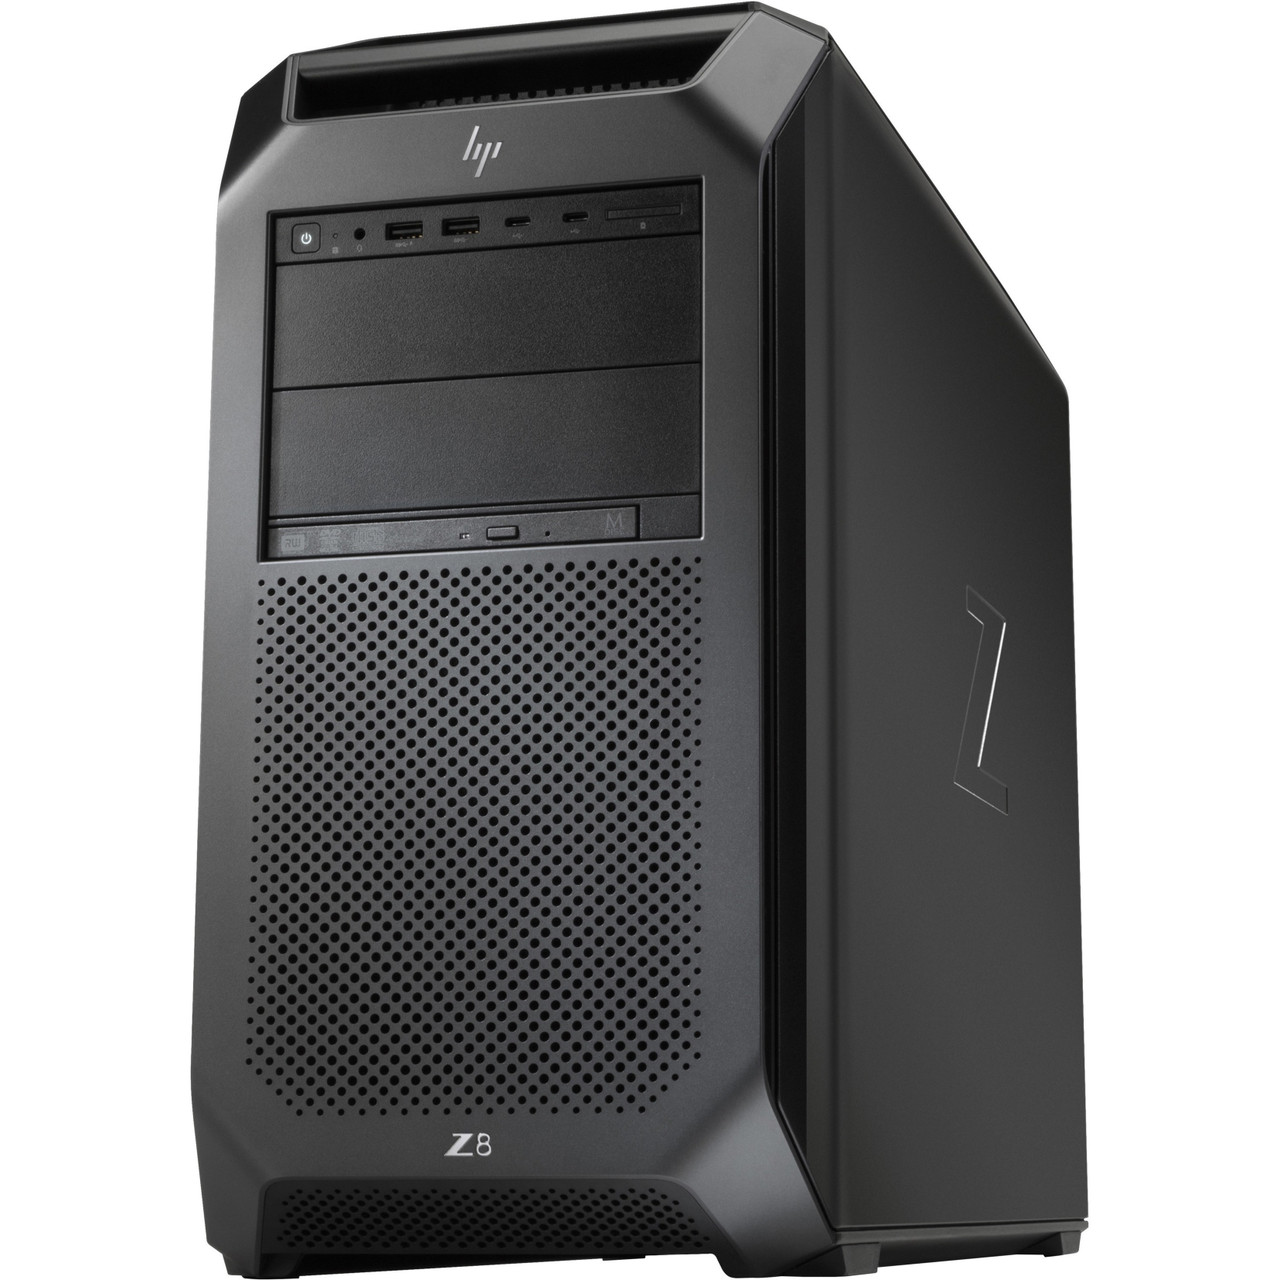 HP Z8 G4 Workstation - Intel Xeon Silver Octa-core (8 Core) 4215R 3.20 GHz - 32 GB DDR4 SDRAM RAM - 512 GB SSD - Tower - Black - 5D2C0US#ABA